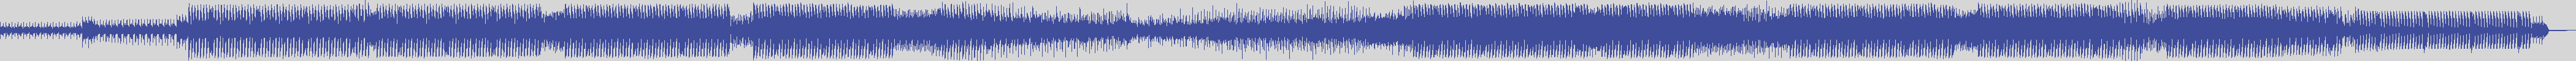 atomic_recordings [AR020] Waterfall, Evans - Green Girl Fnk [Cristian Viviano Remix] audio wave form